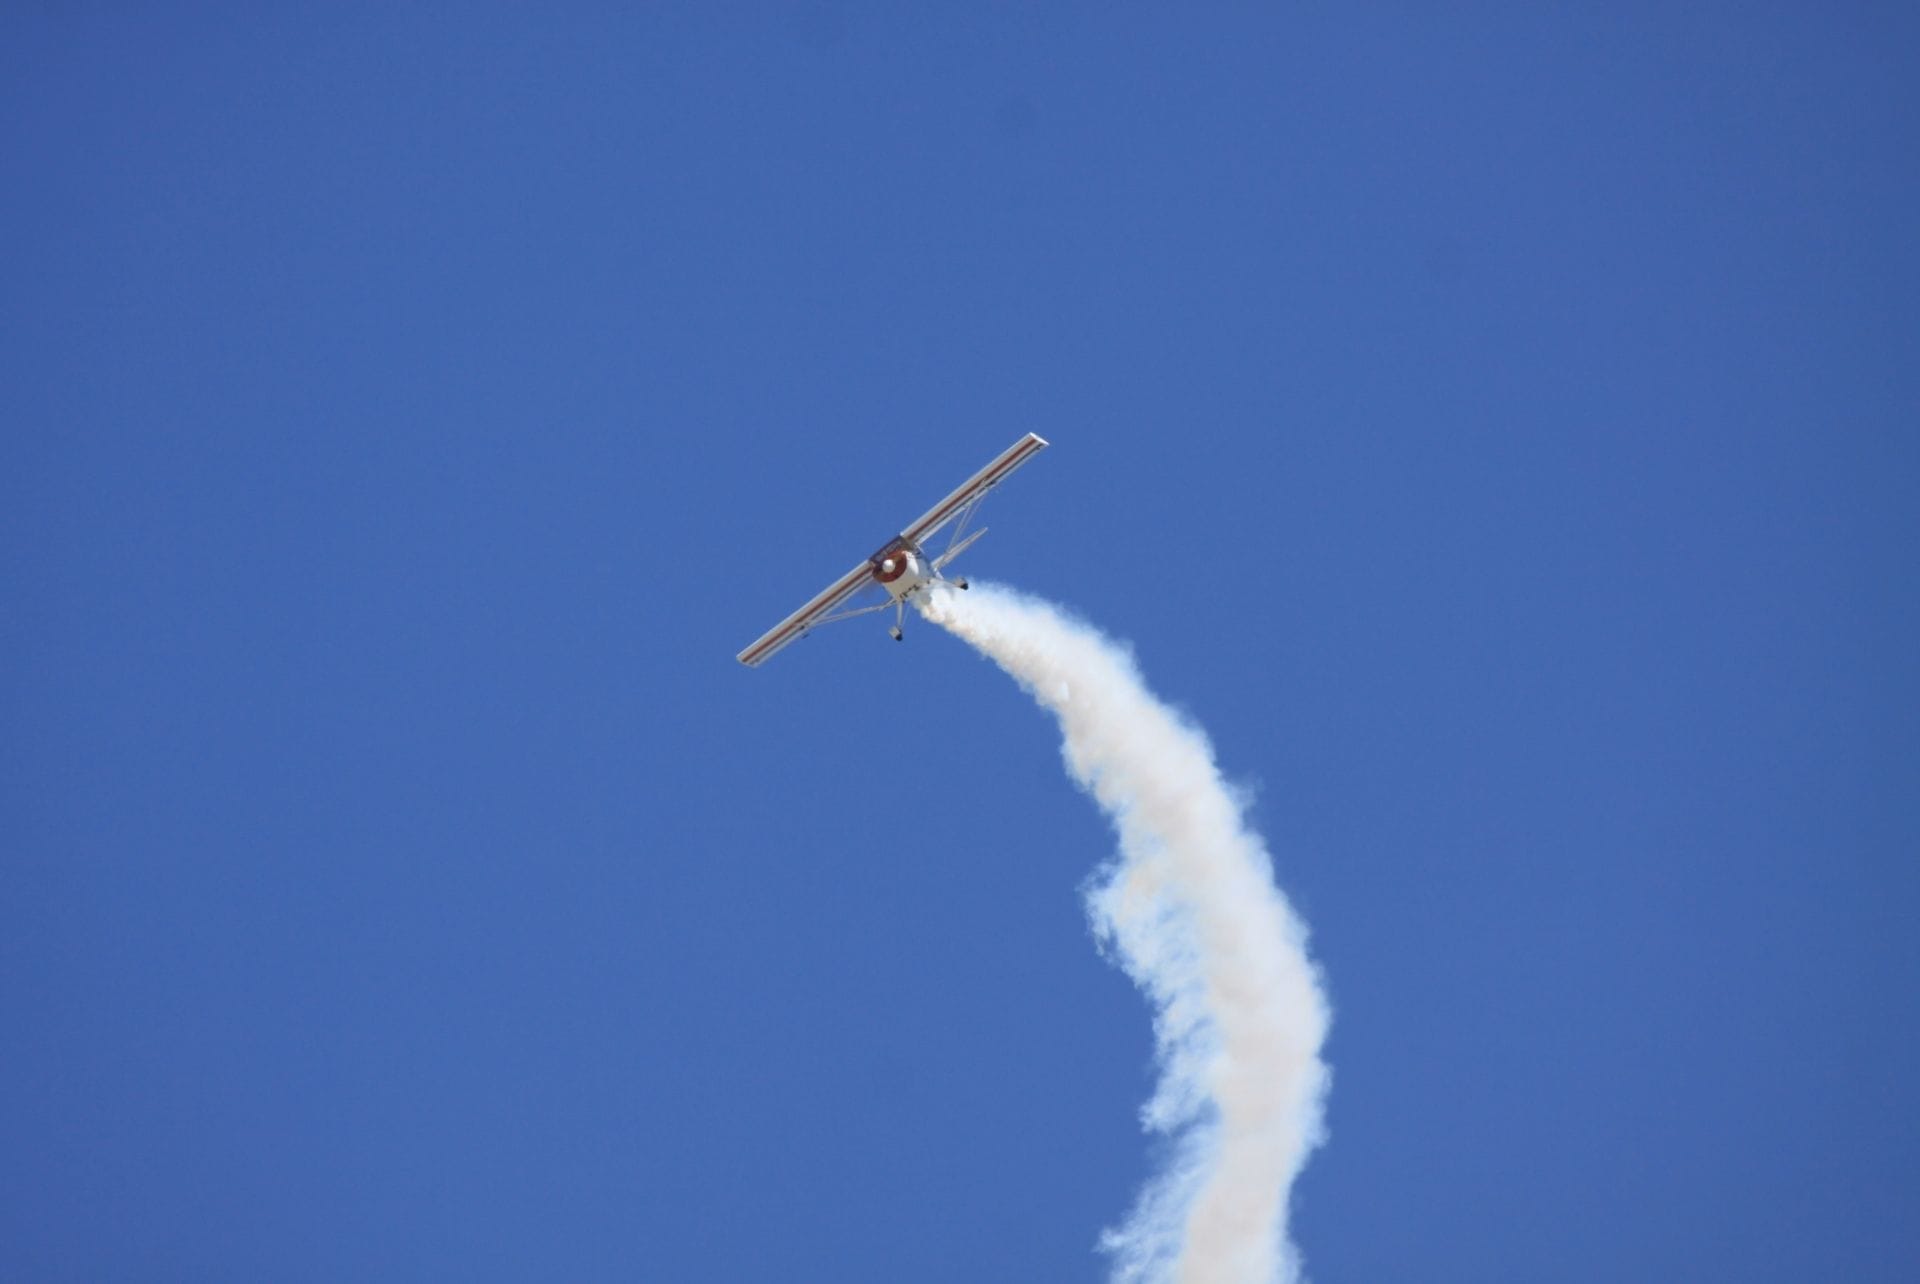 Aerobatic Display At Air Show - Wings Over Camarillo